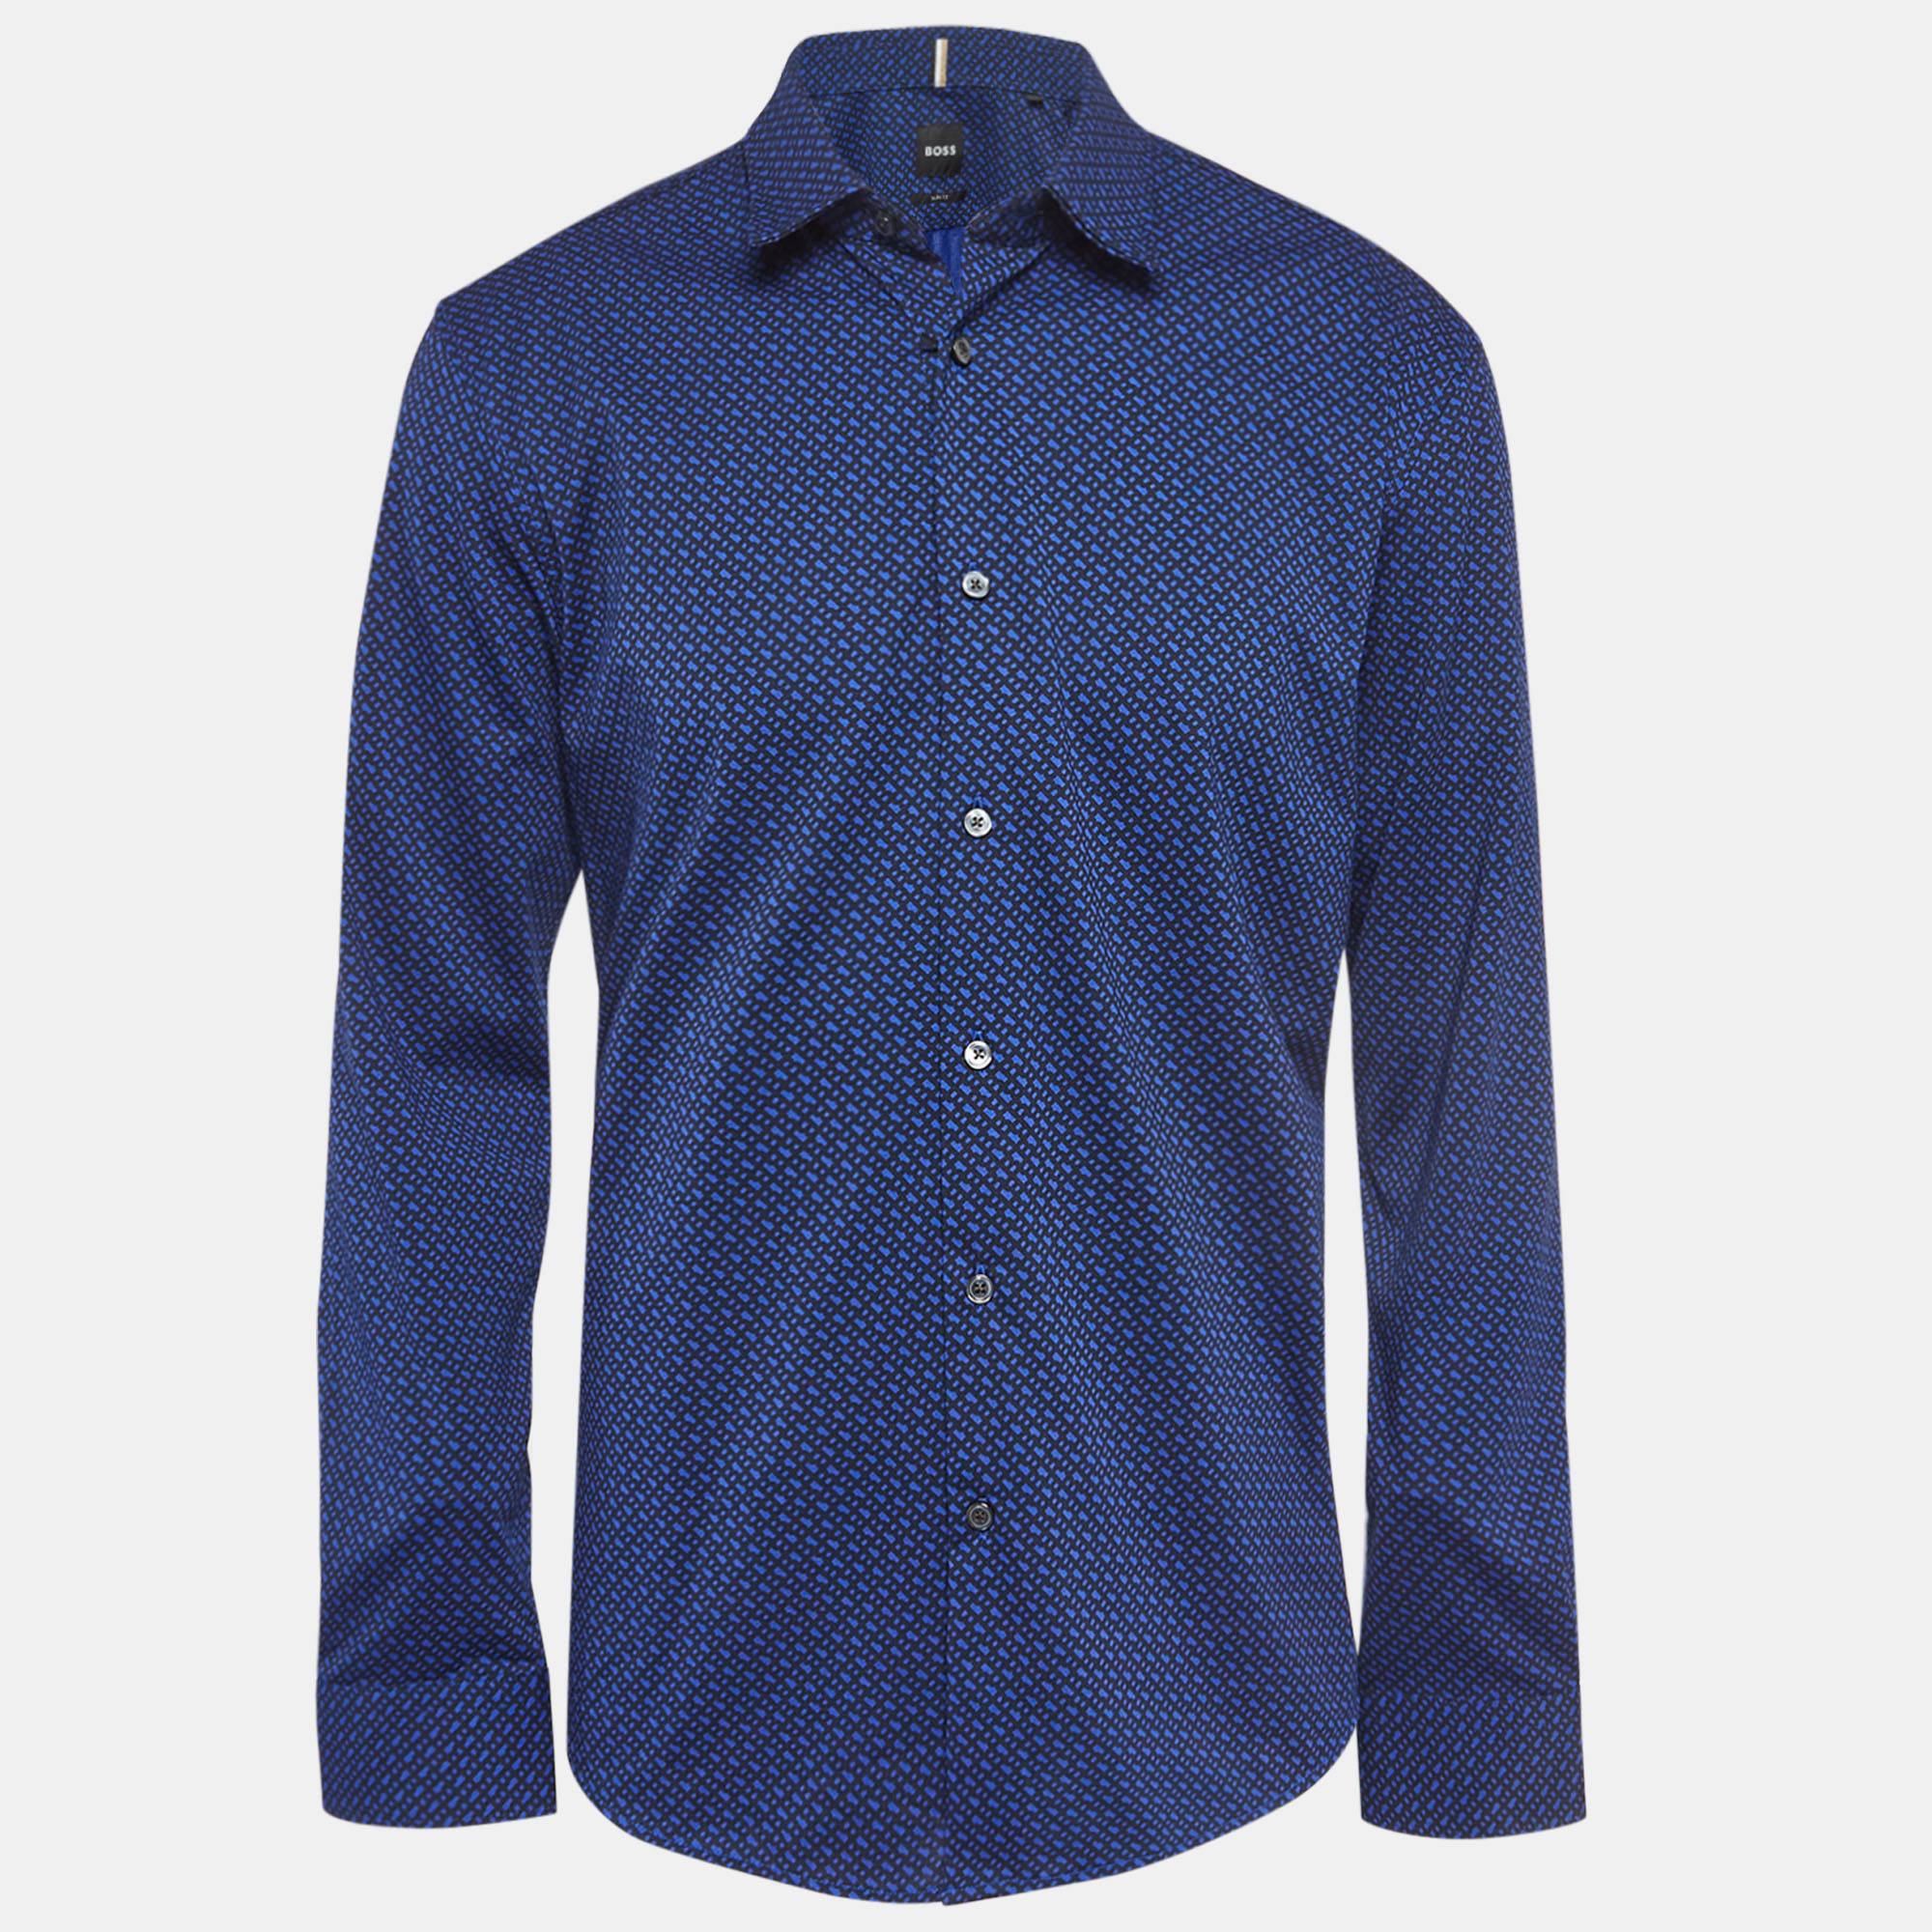 Boss by hugo boss blue b monogram cotton blend slim fit shirt xl